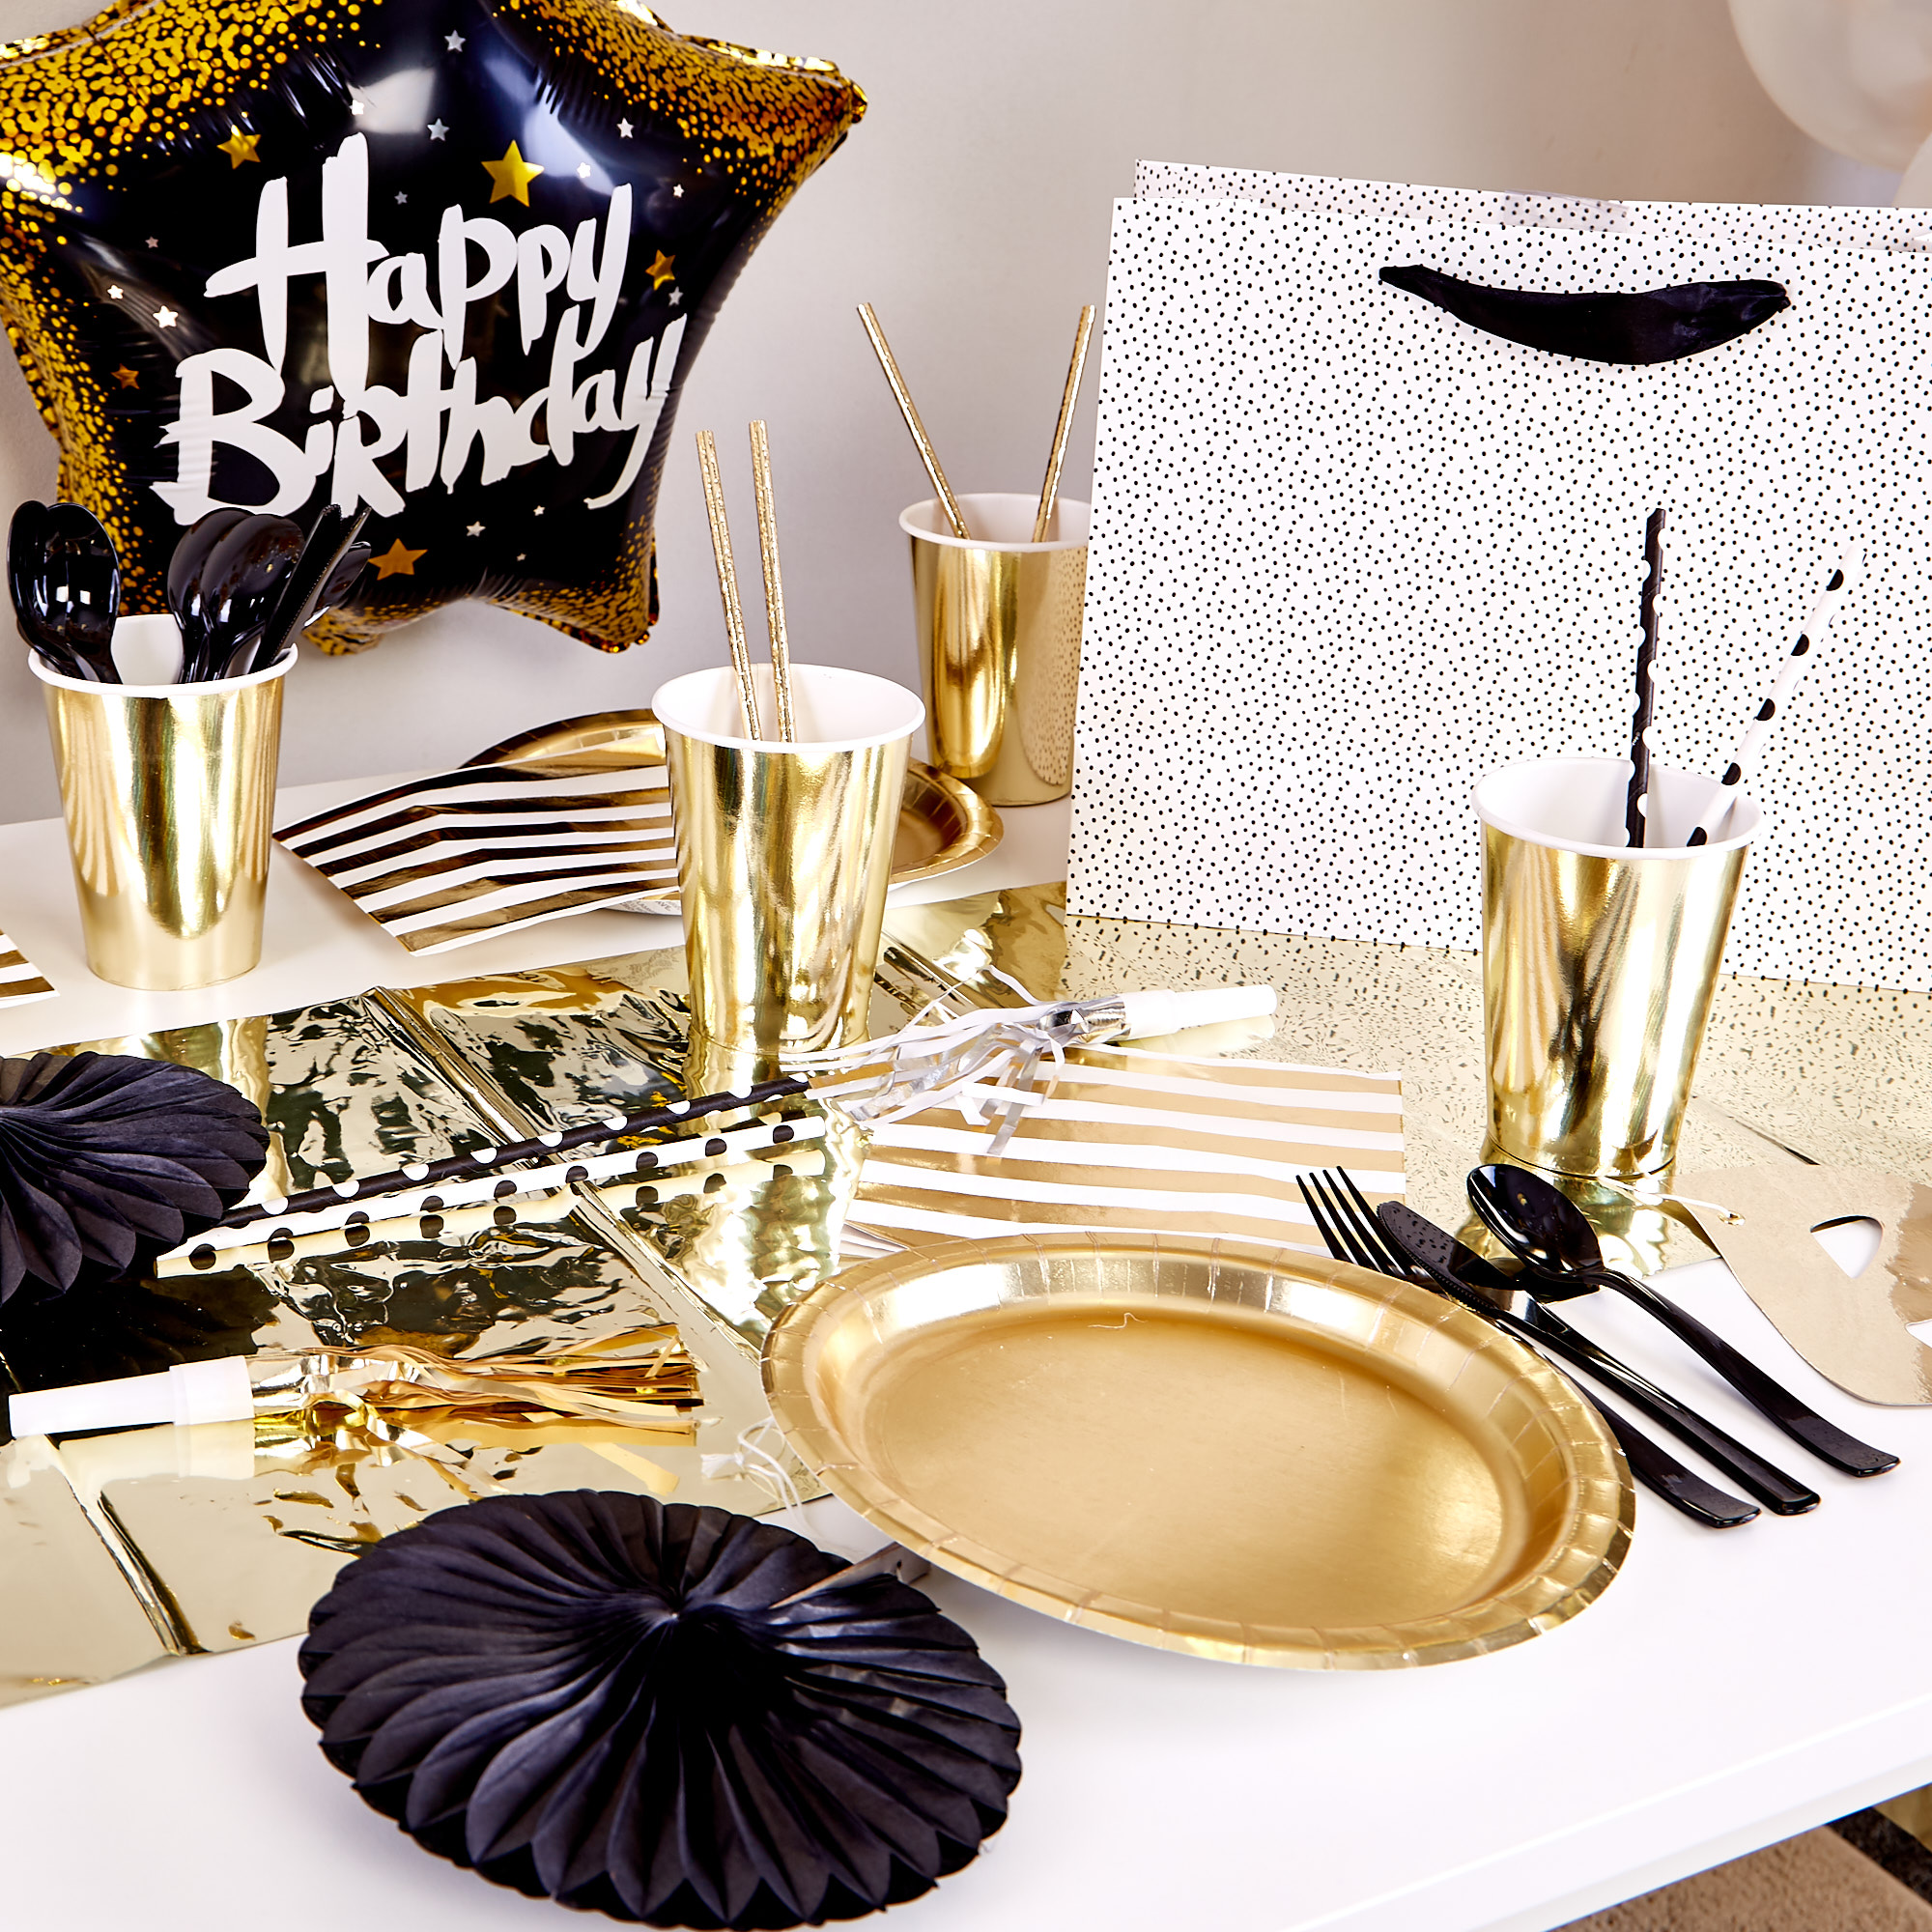 Black & Gold-Themed Birthday Party Range